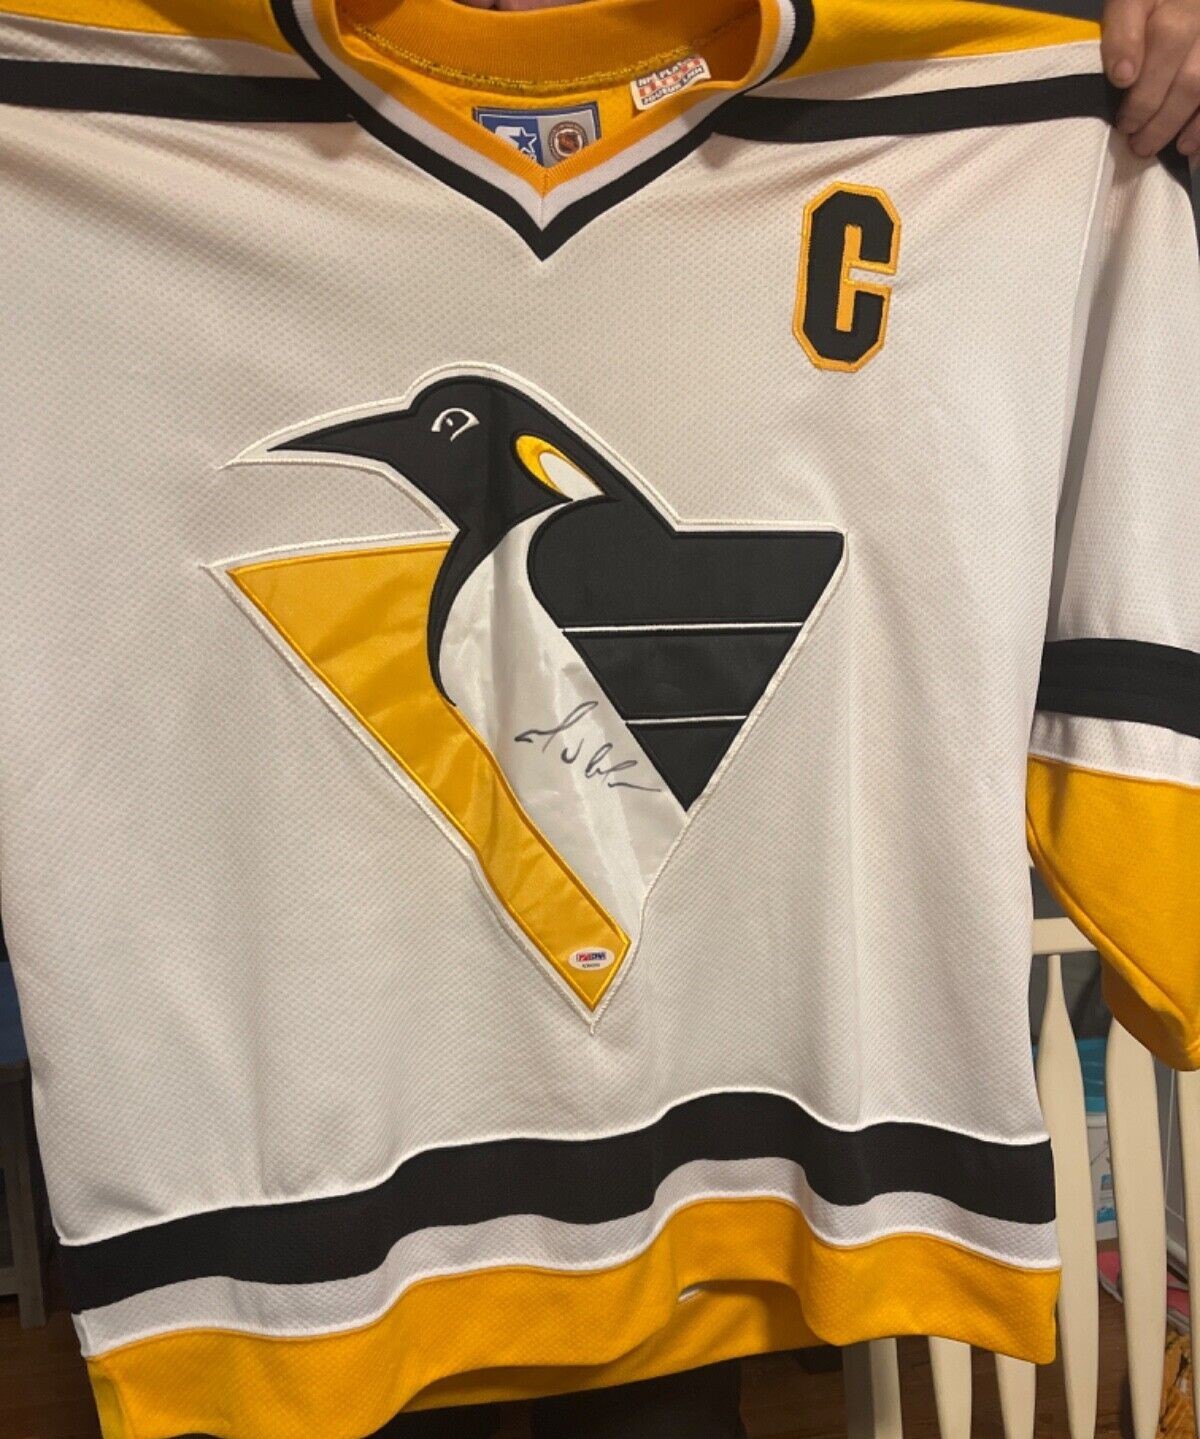 Mario Lemieux Pittsburgh Penguins Hockey Jersey, Size Small